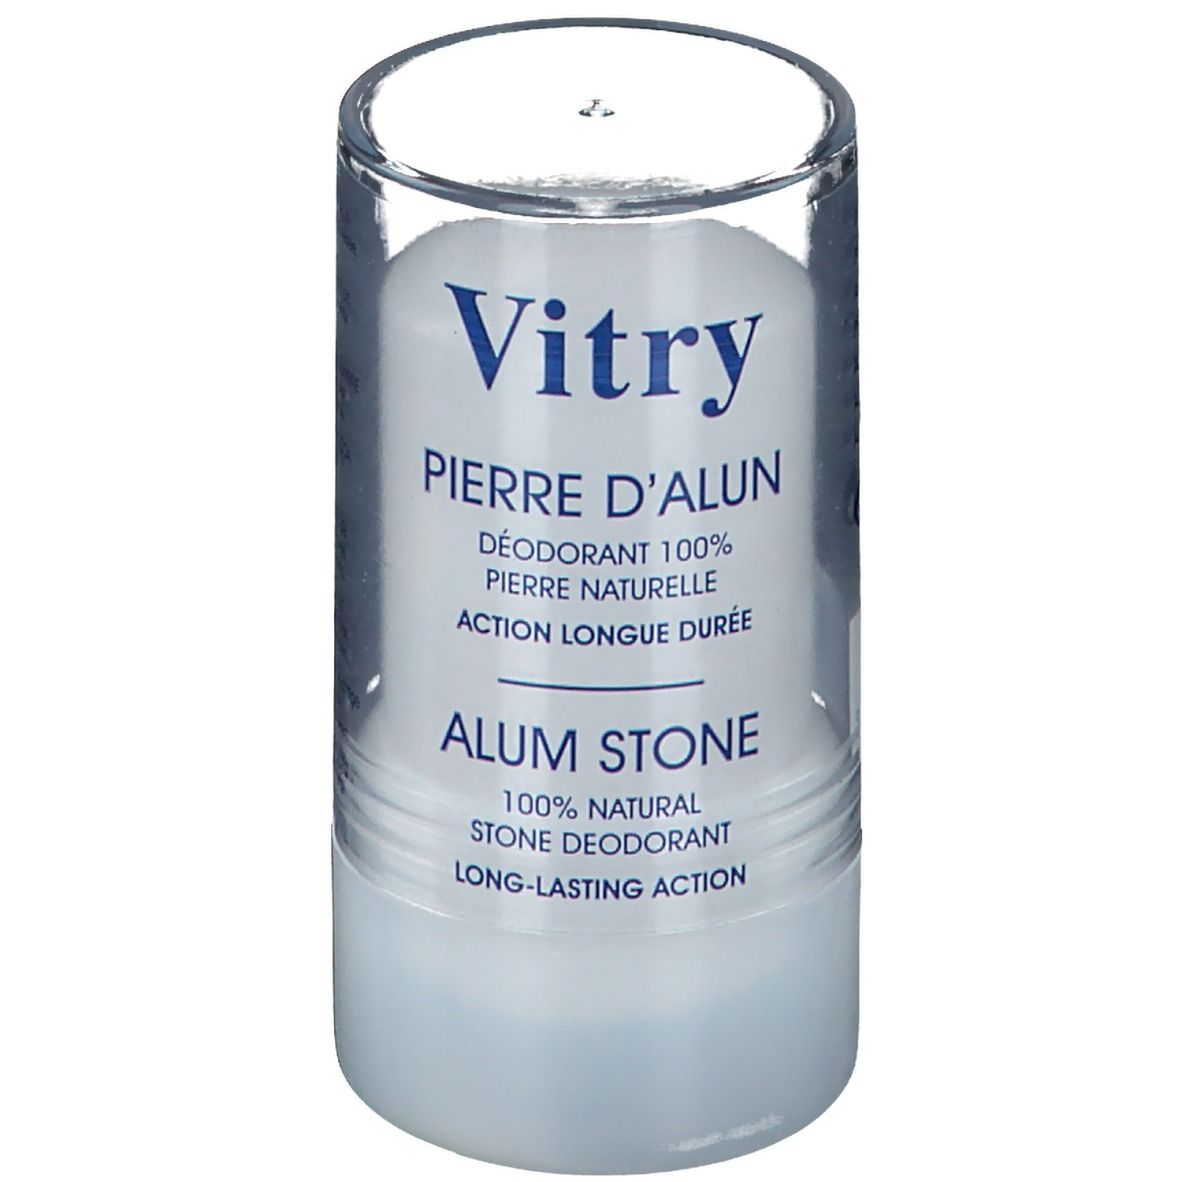 Vitry Alum Stone Big